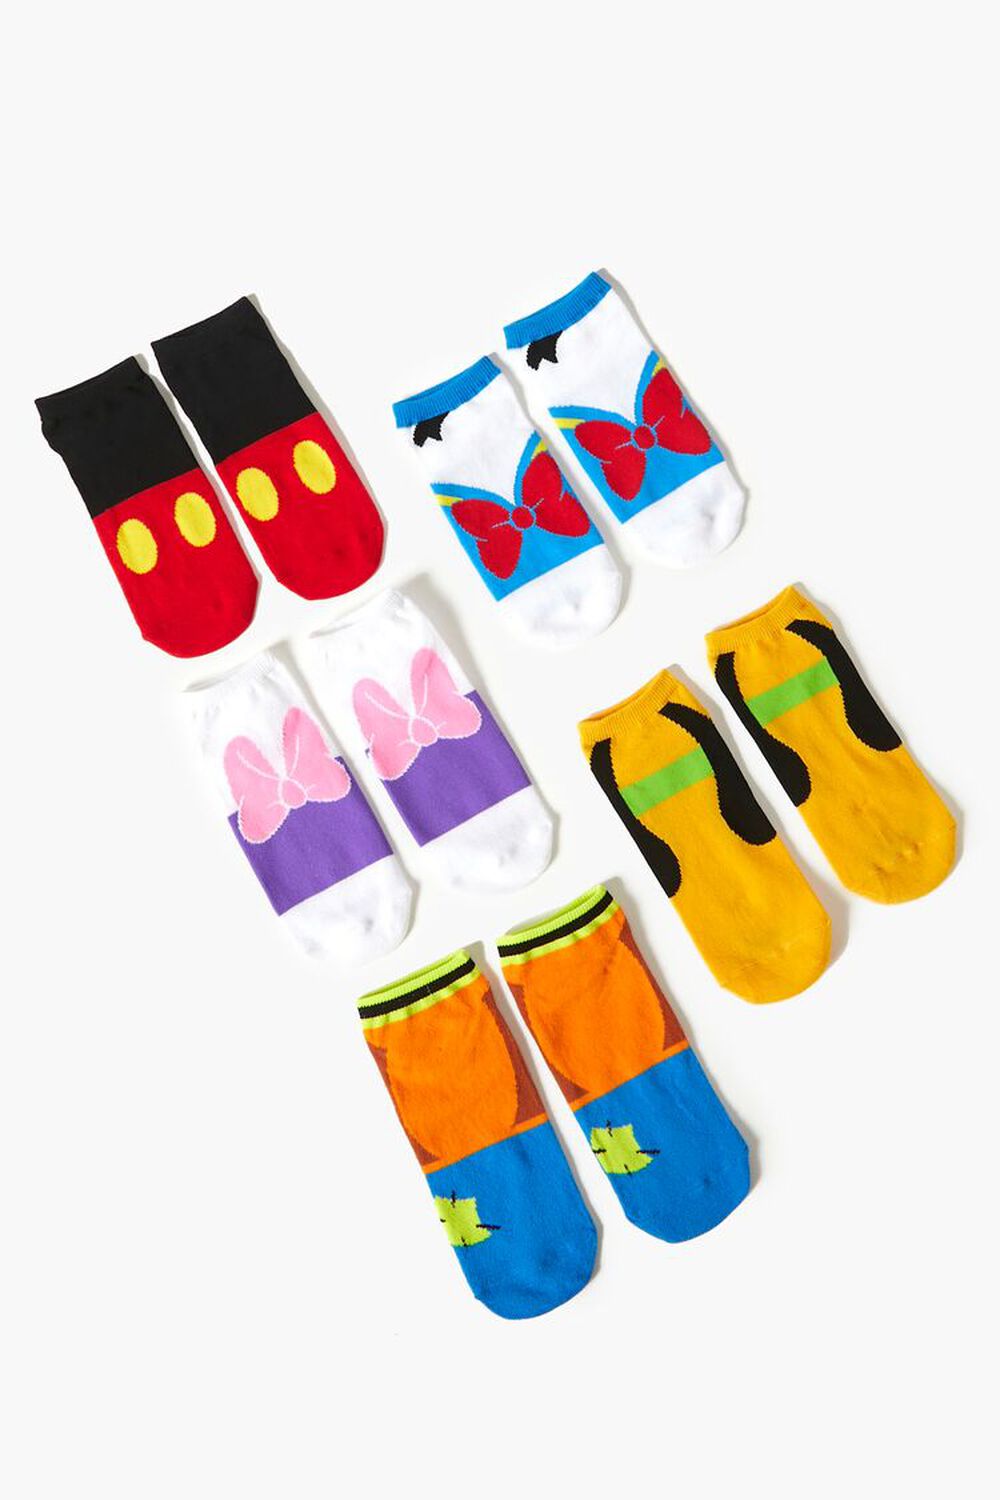 Disney Mens Socks, 5 Pack Novelty Socks, Pluto Donald Goofy Disney